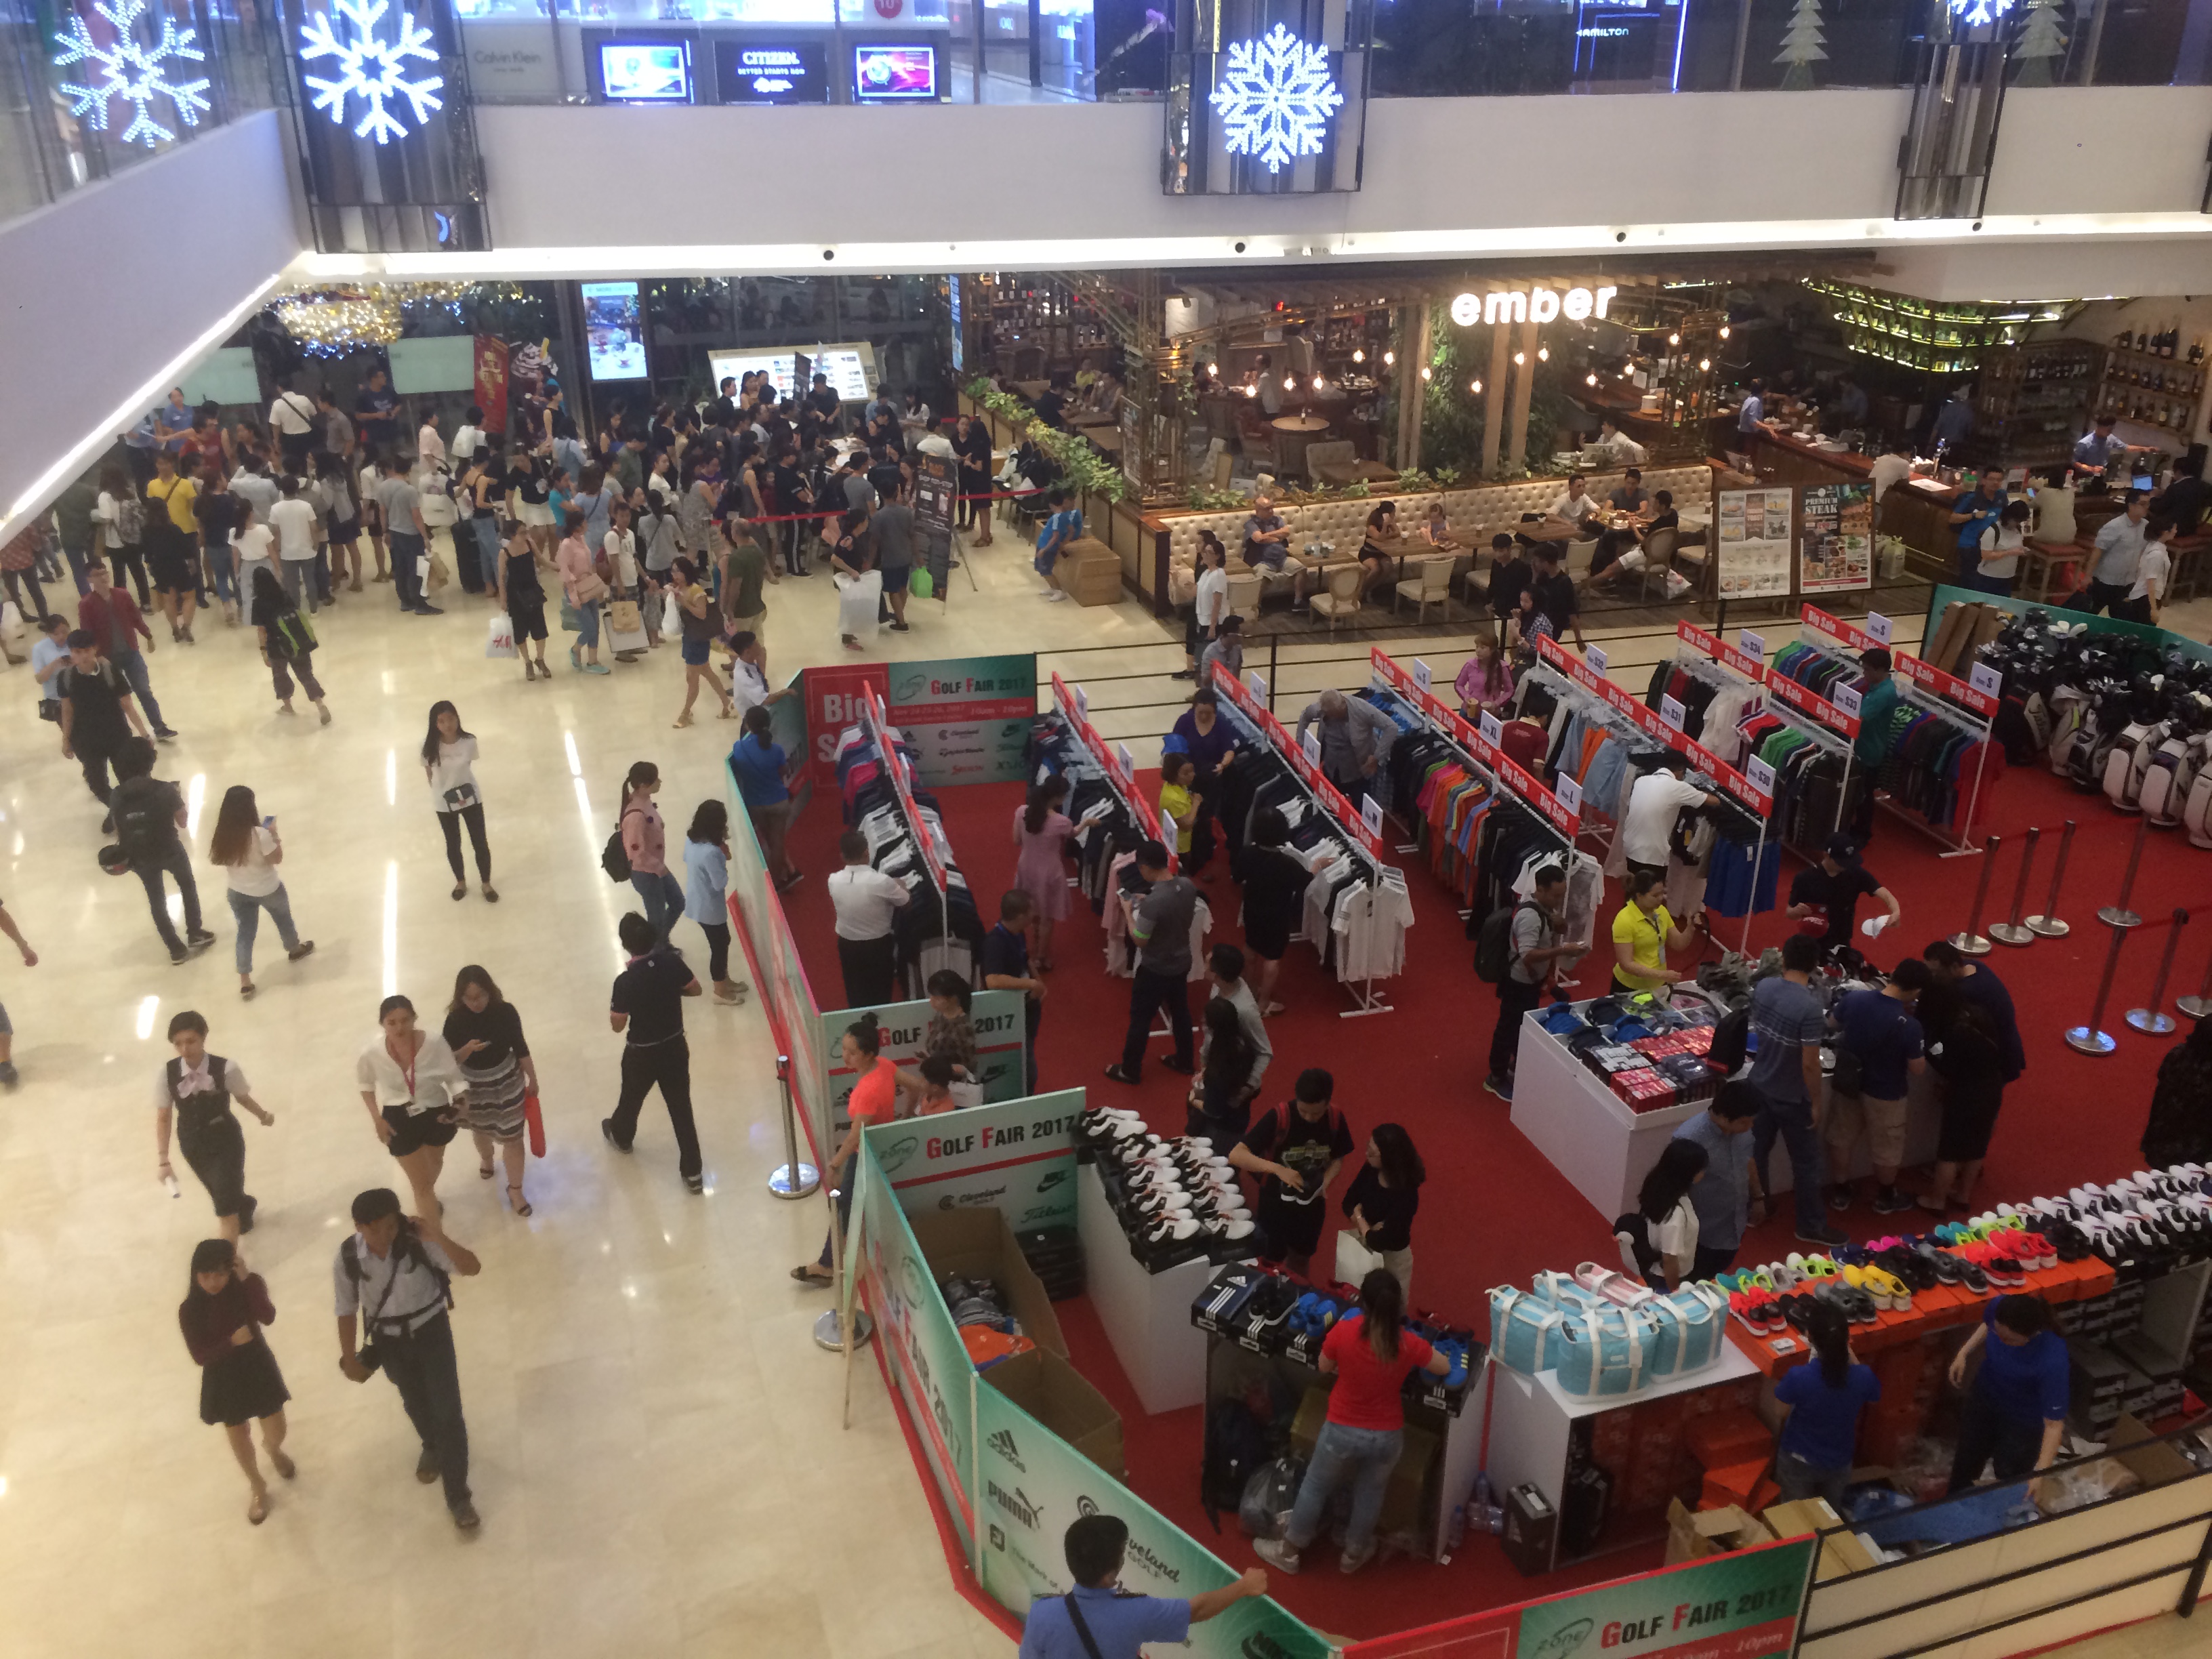 Saigon shoppers flood stores for Black Friday sales